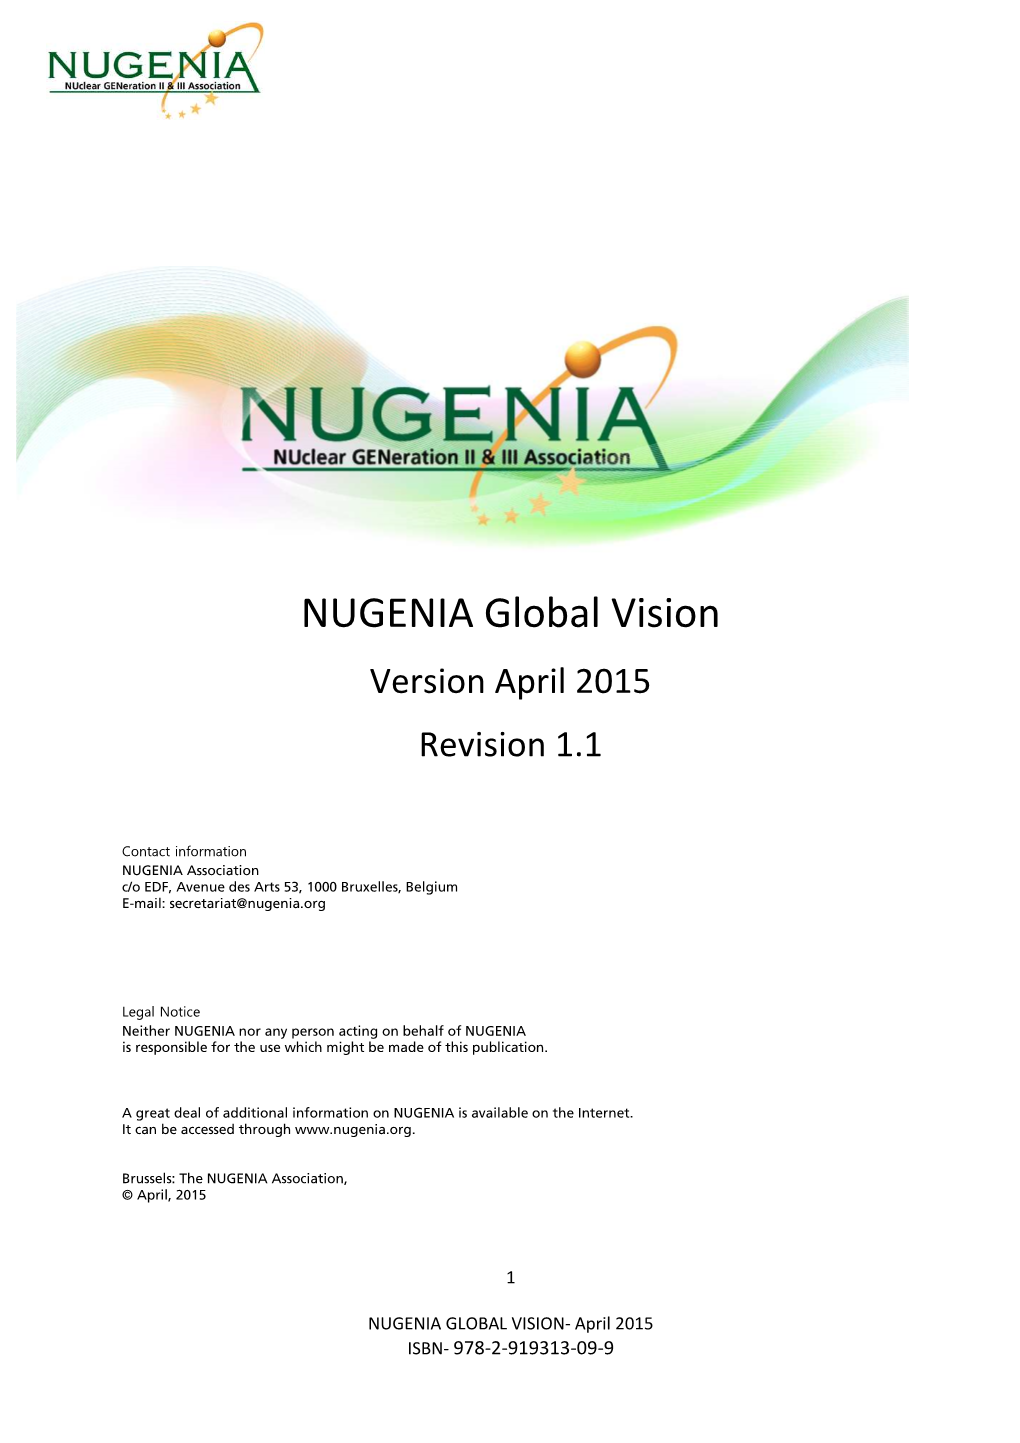 NUGENIA Global Vision Document